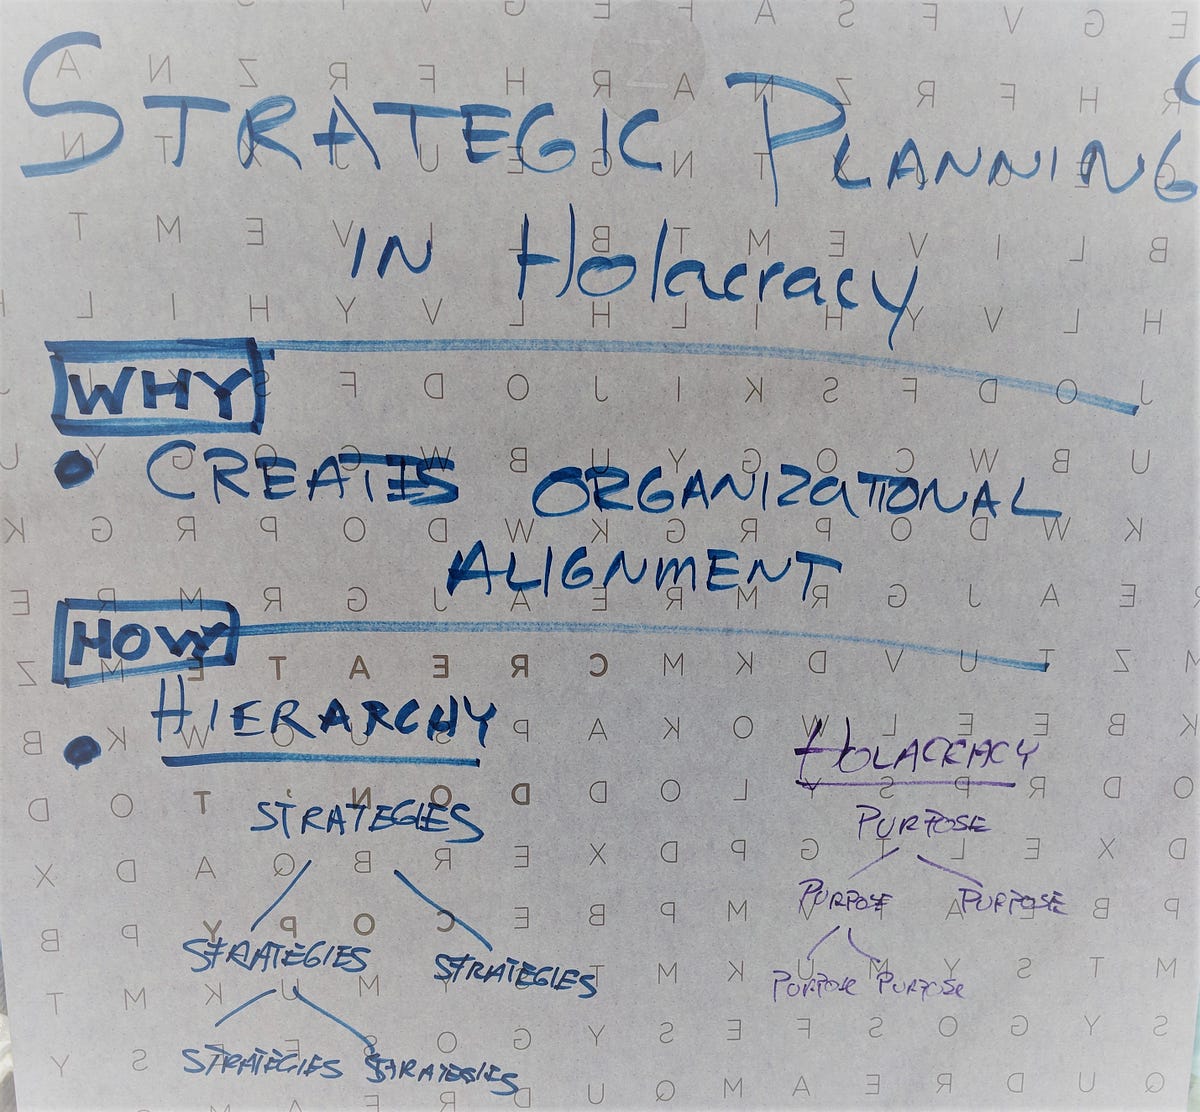 strategic planning hierarchy